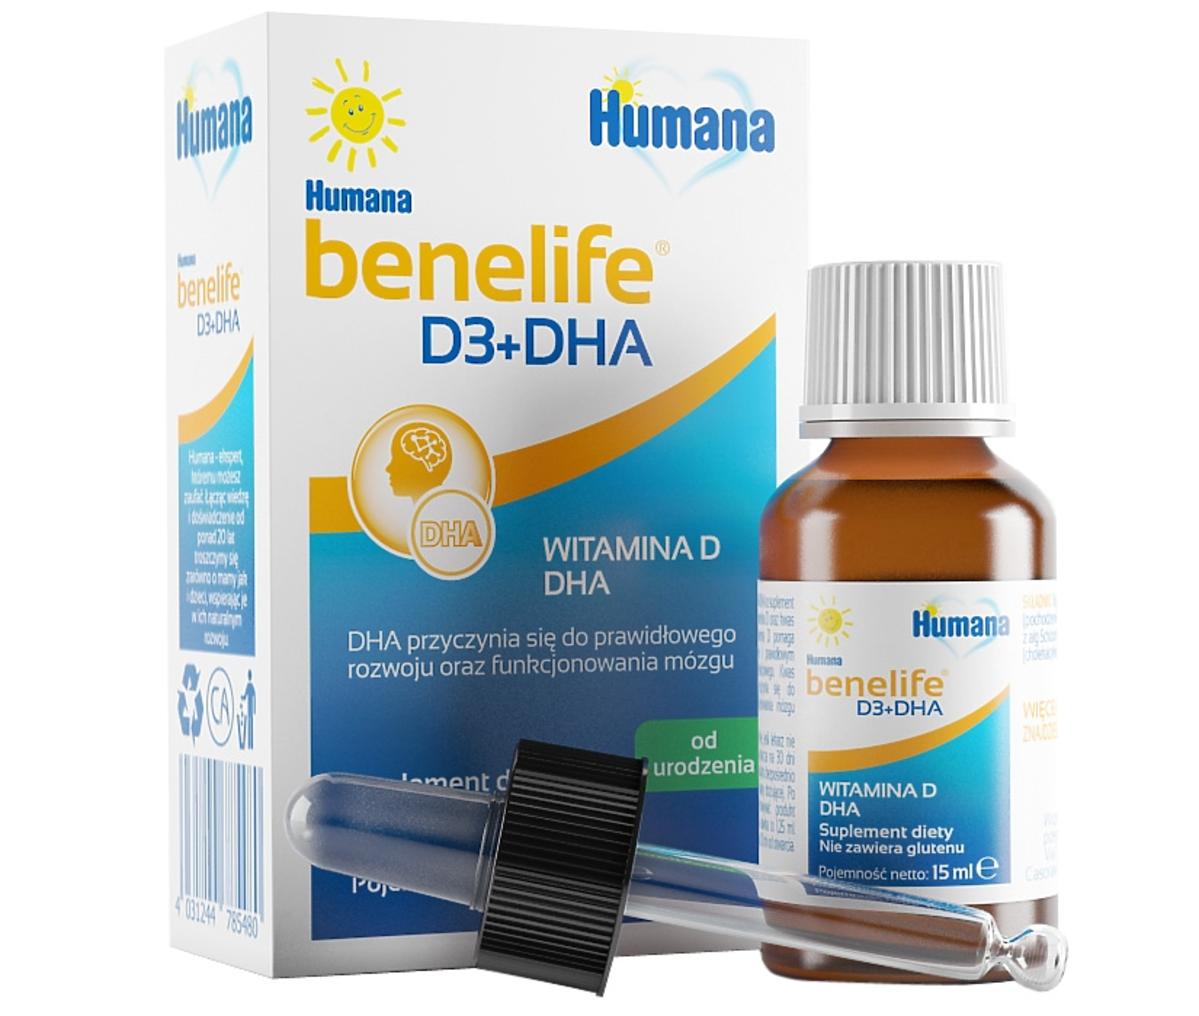 Humana benelife D3+DHA